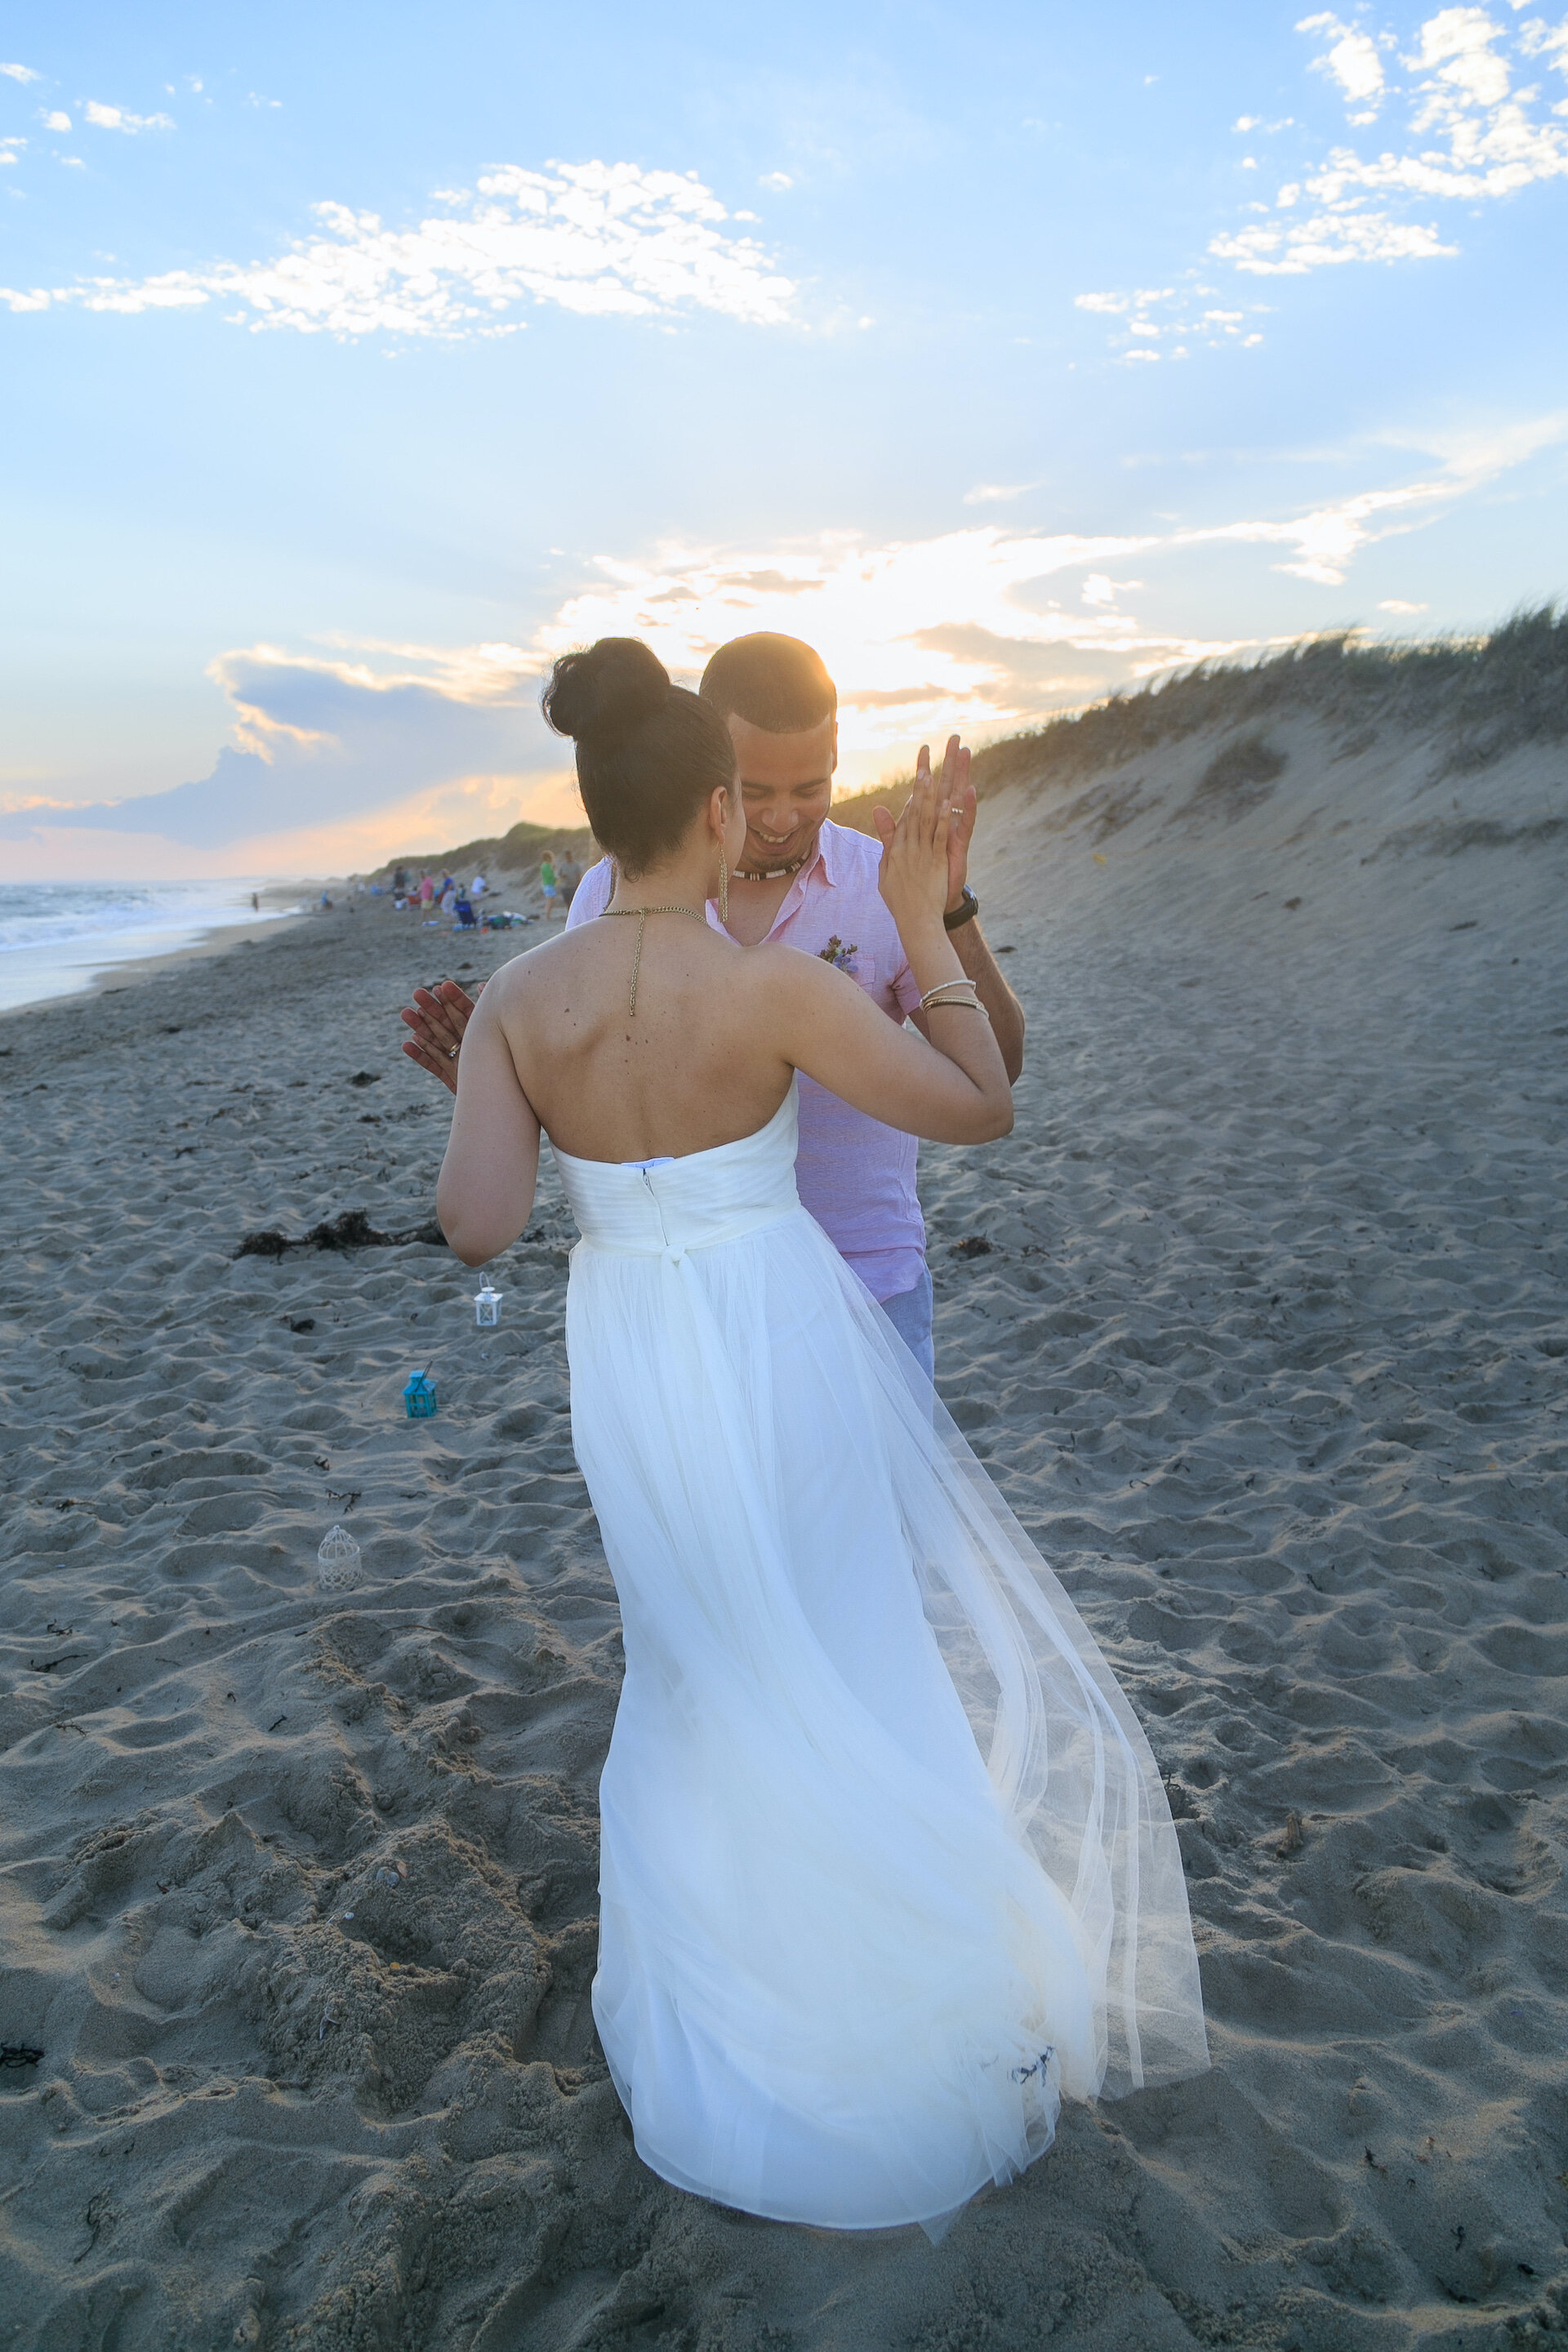 couple dancing on MV beach.jpg